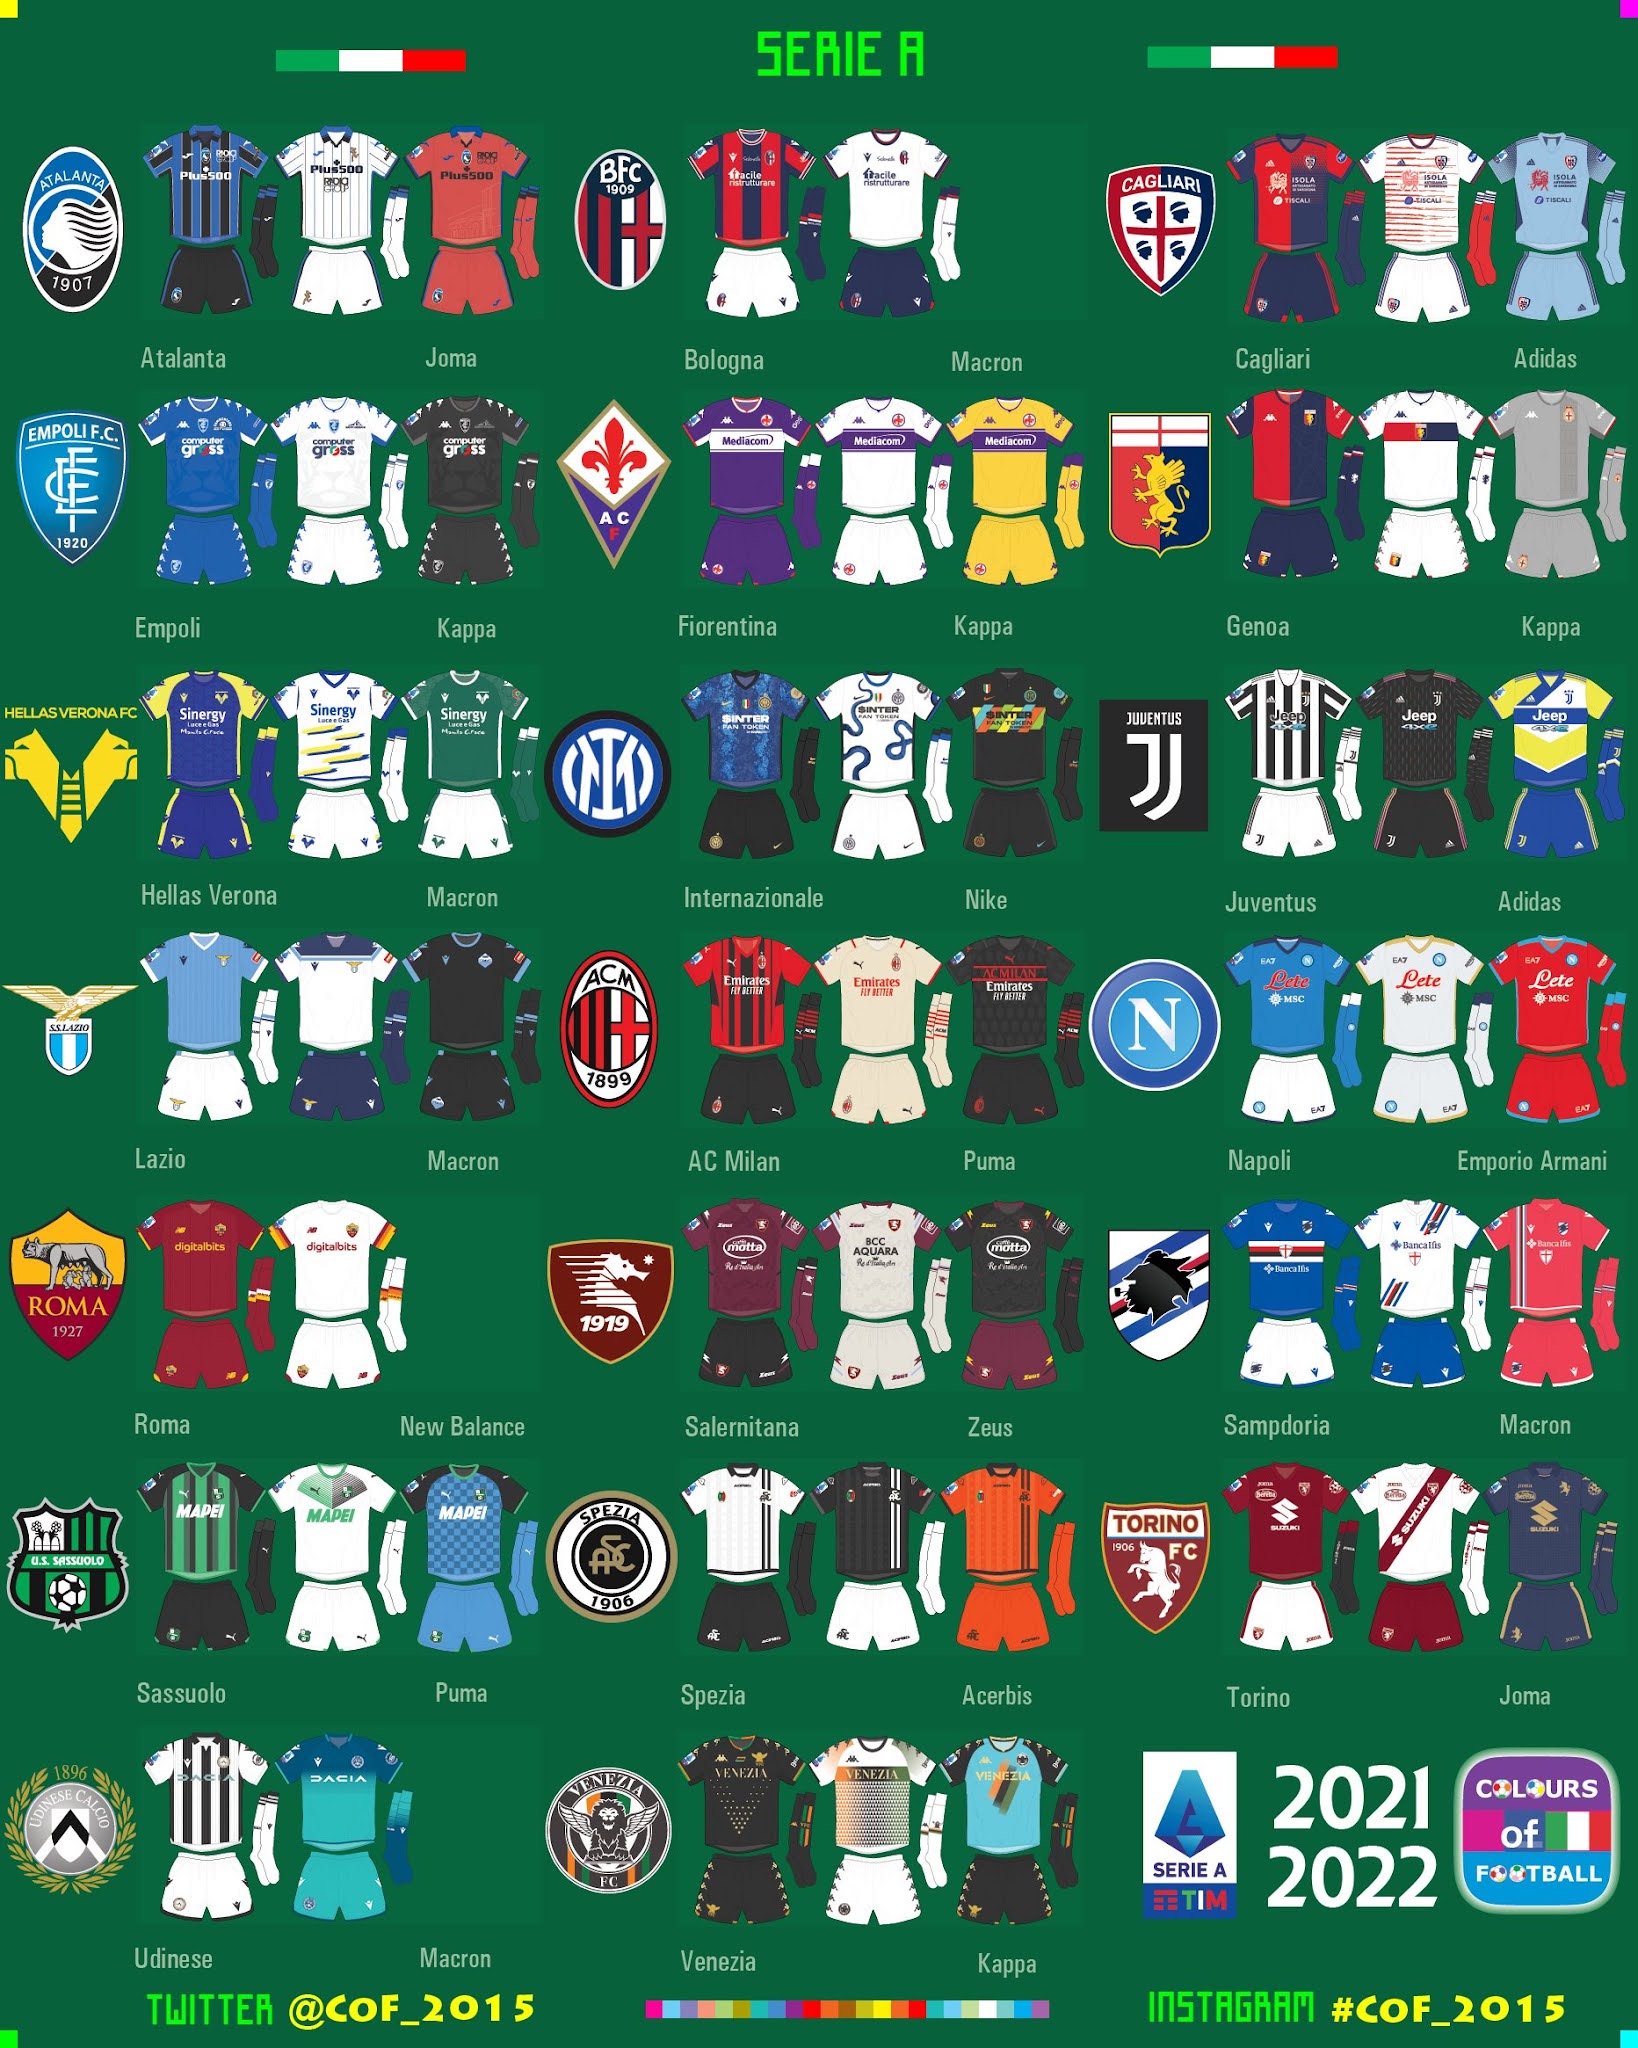 Camisas e fornecedoras da Serie A 2020-2021 (Campeonato Italiano